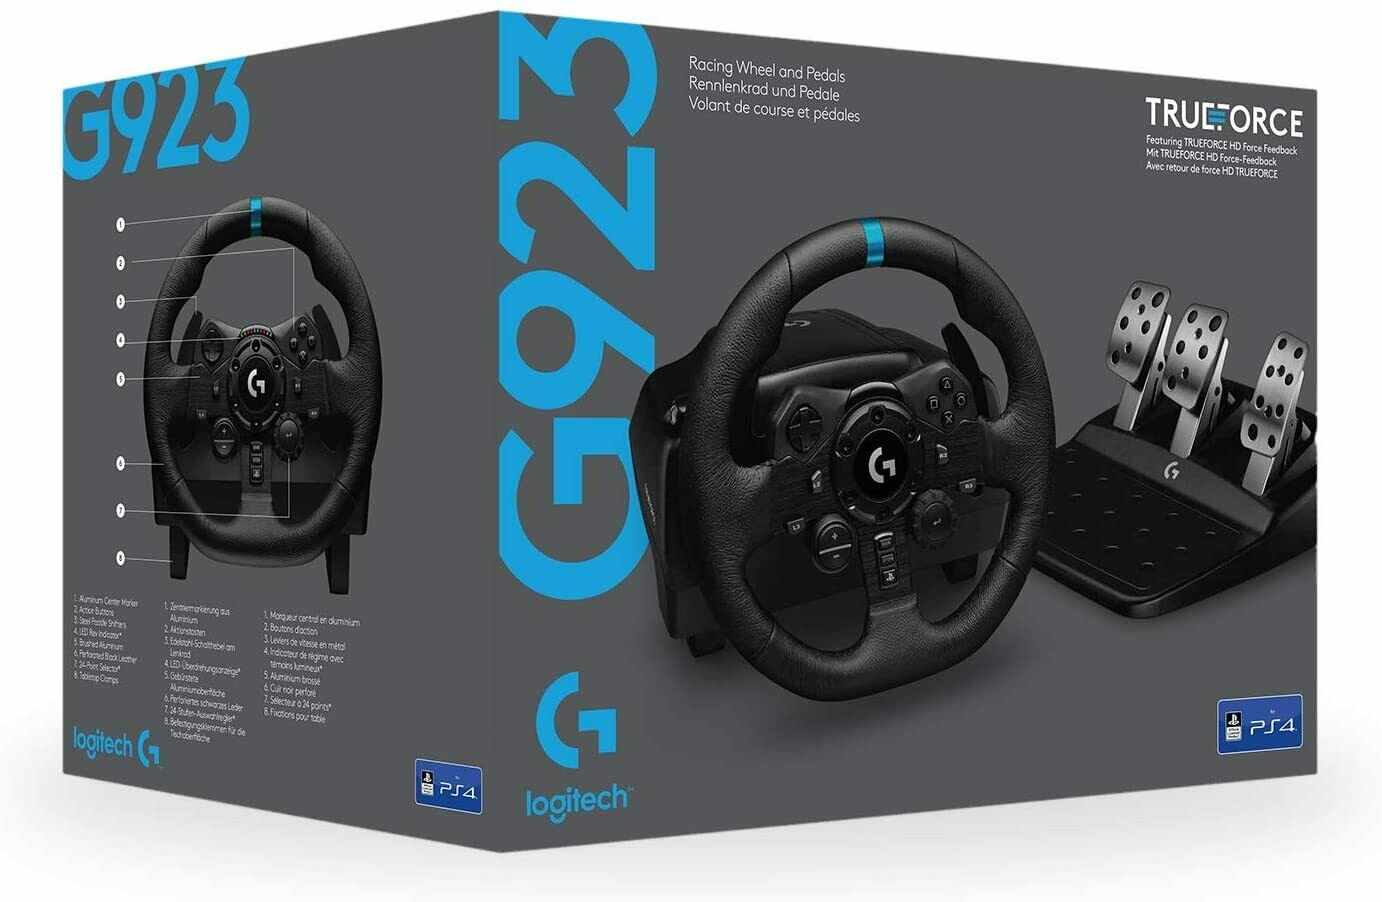 1. Logitech G923 steering wheel & pedals